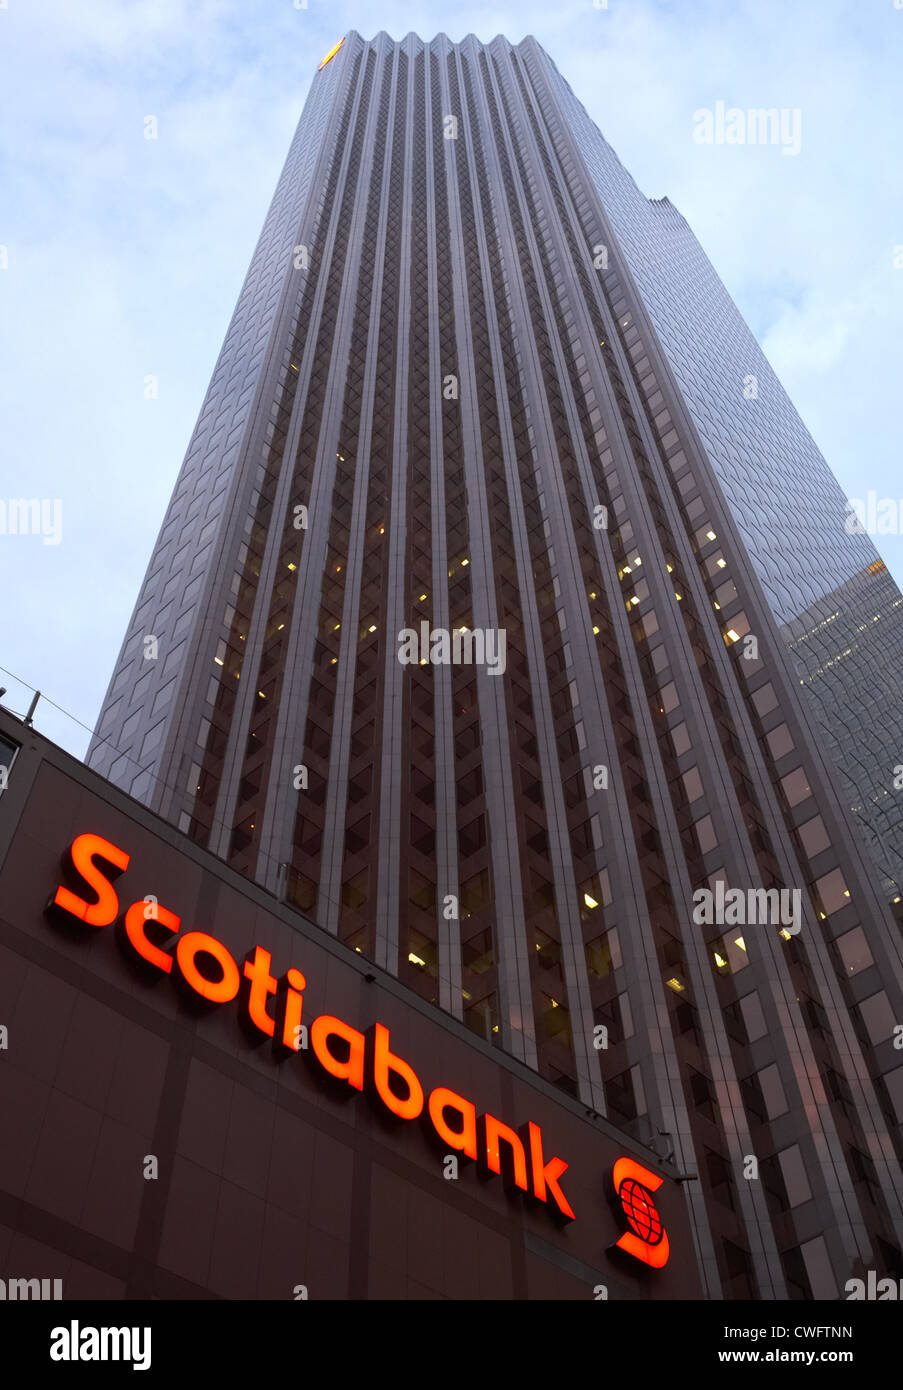 Toronto - Bank Tower of Scotiabank with company logo Stock Photo